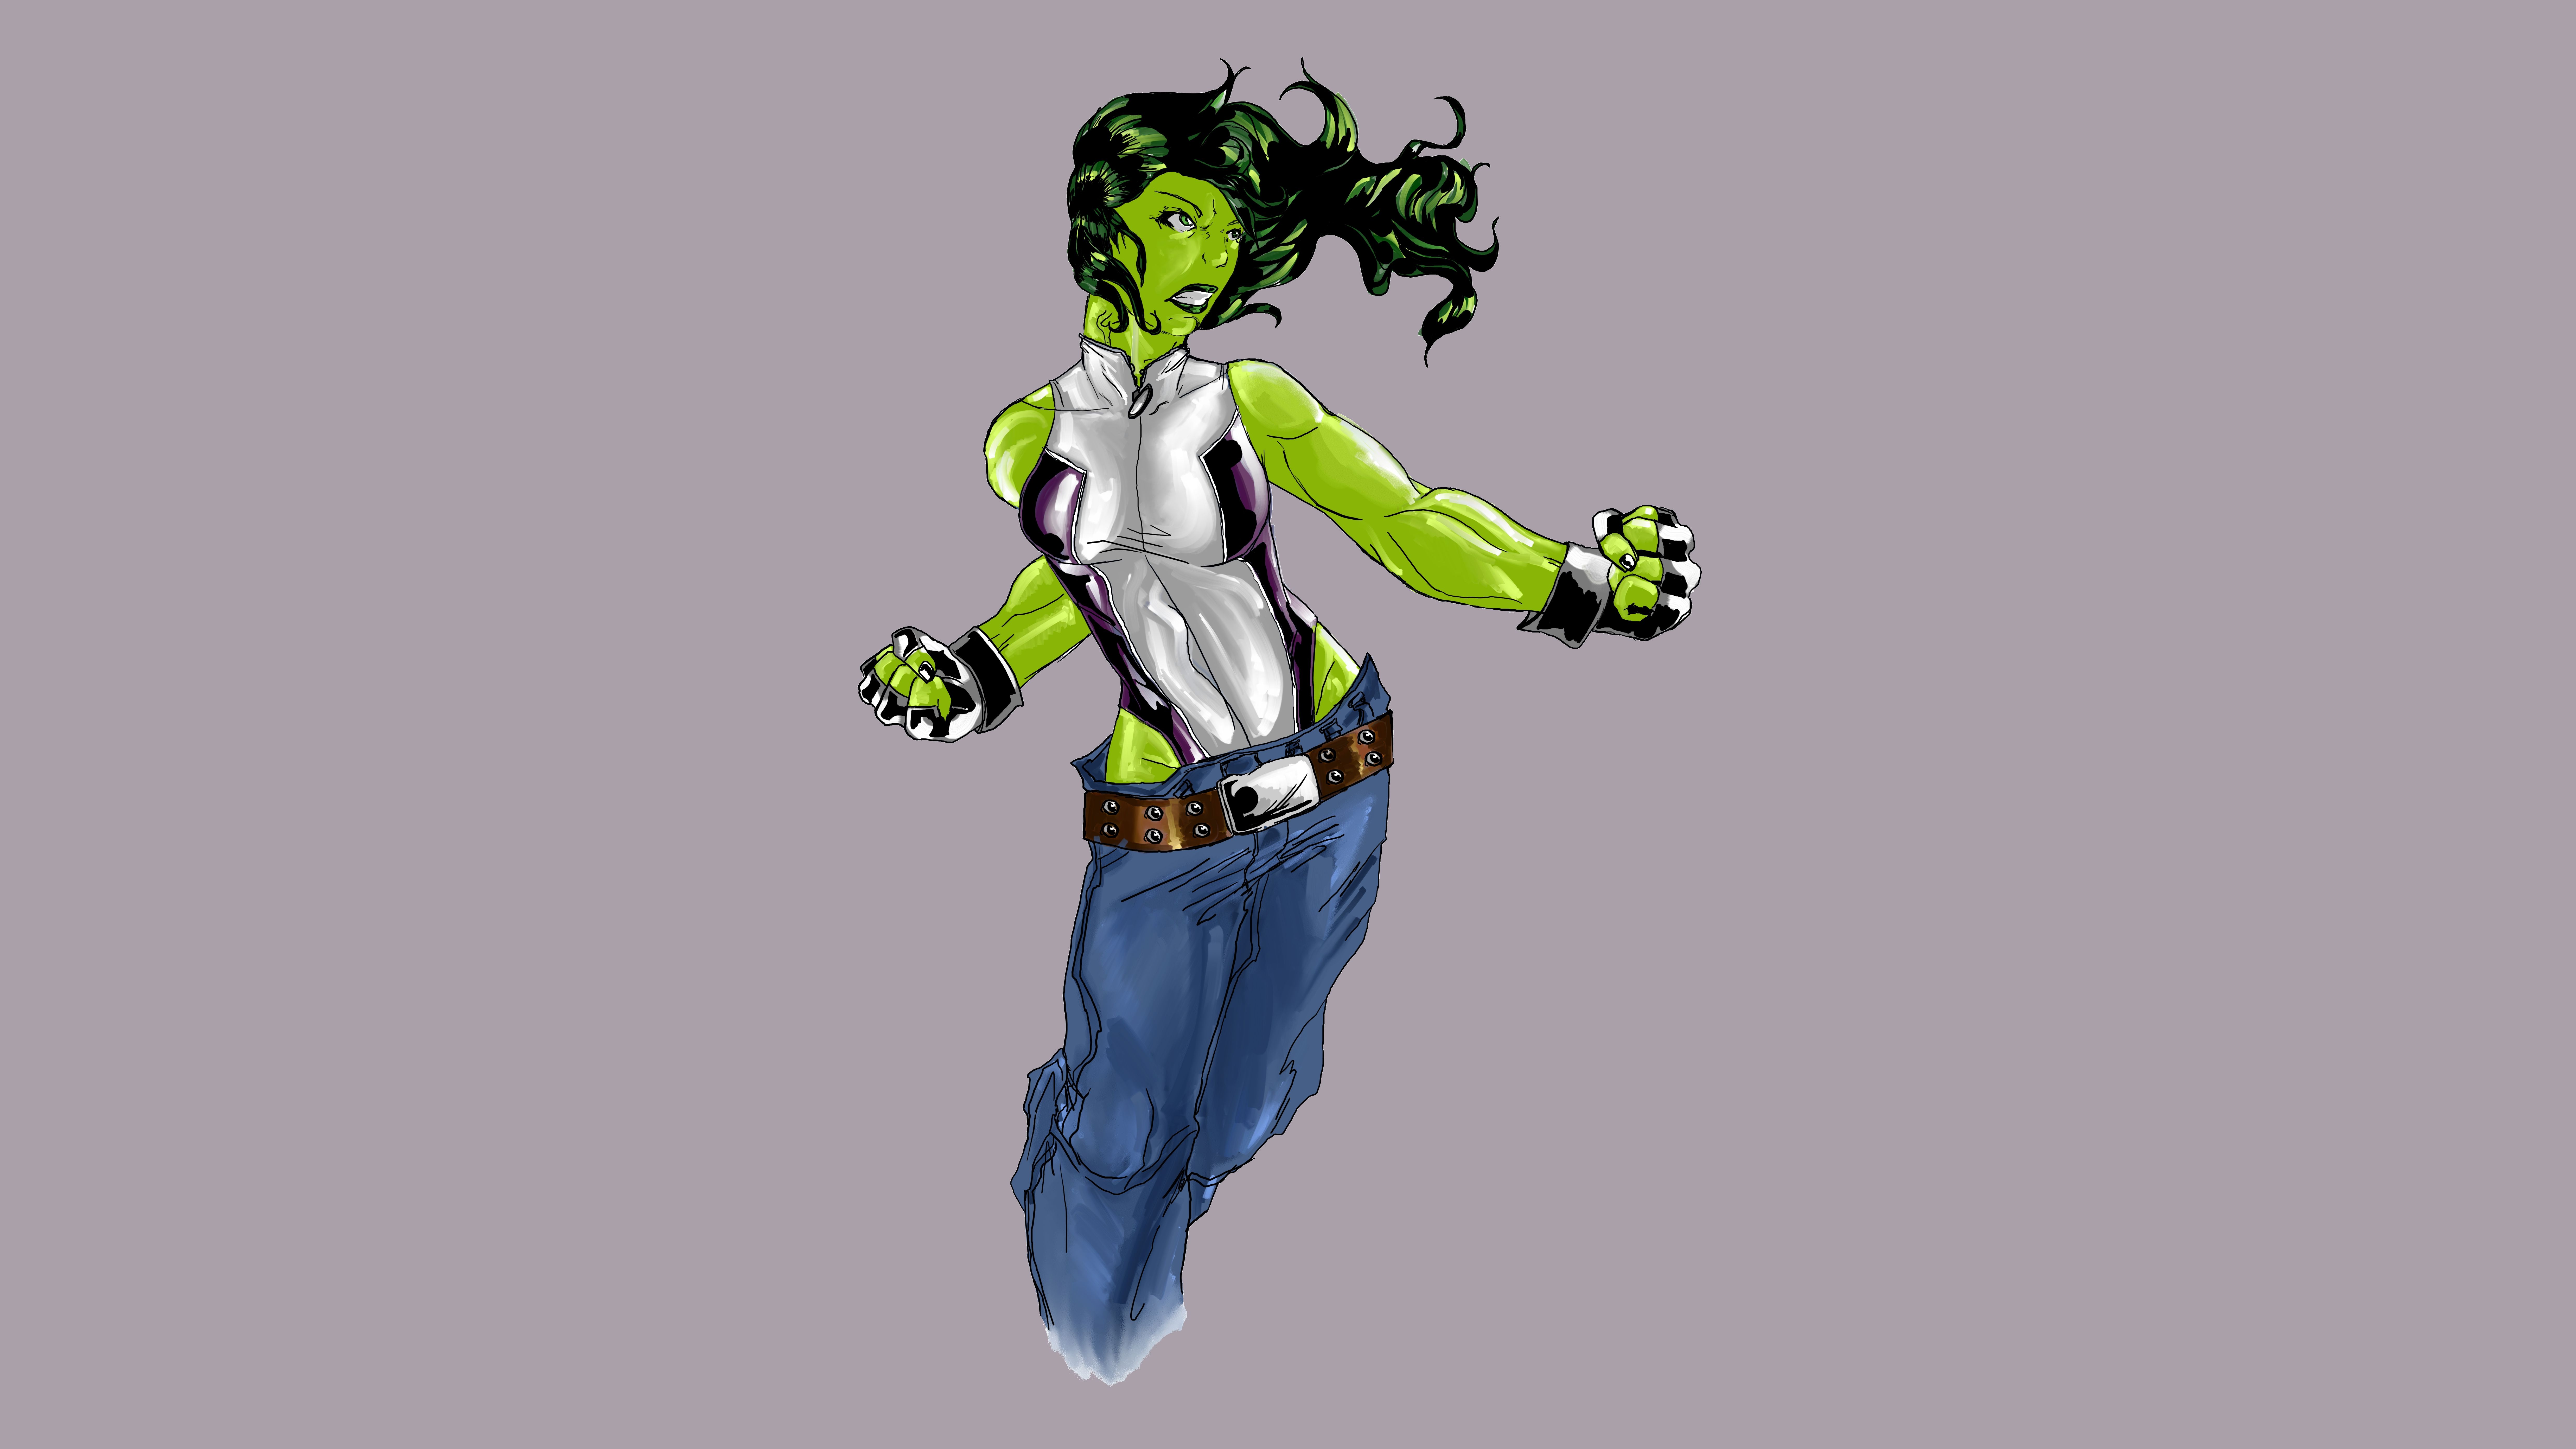 She Hulk 8k Ultra HD Wallpaper And Background Imagex5569